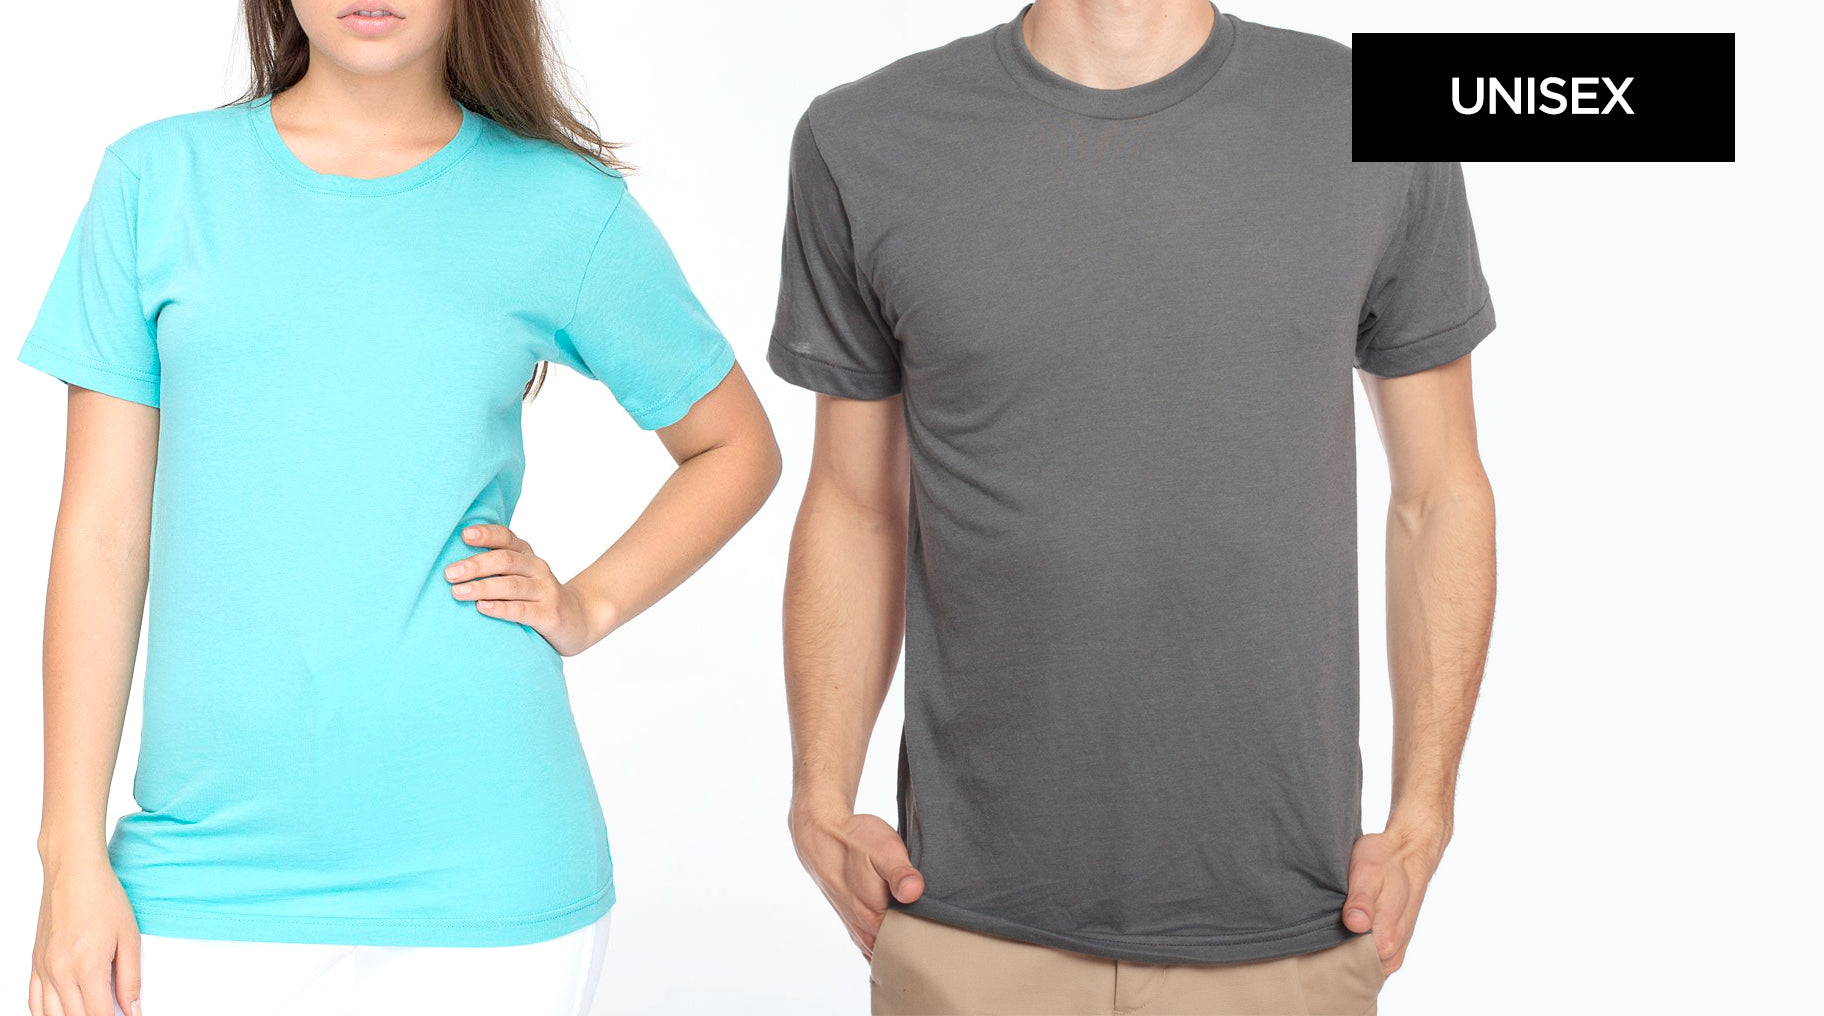 unisex shirt size conversion chart